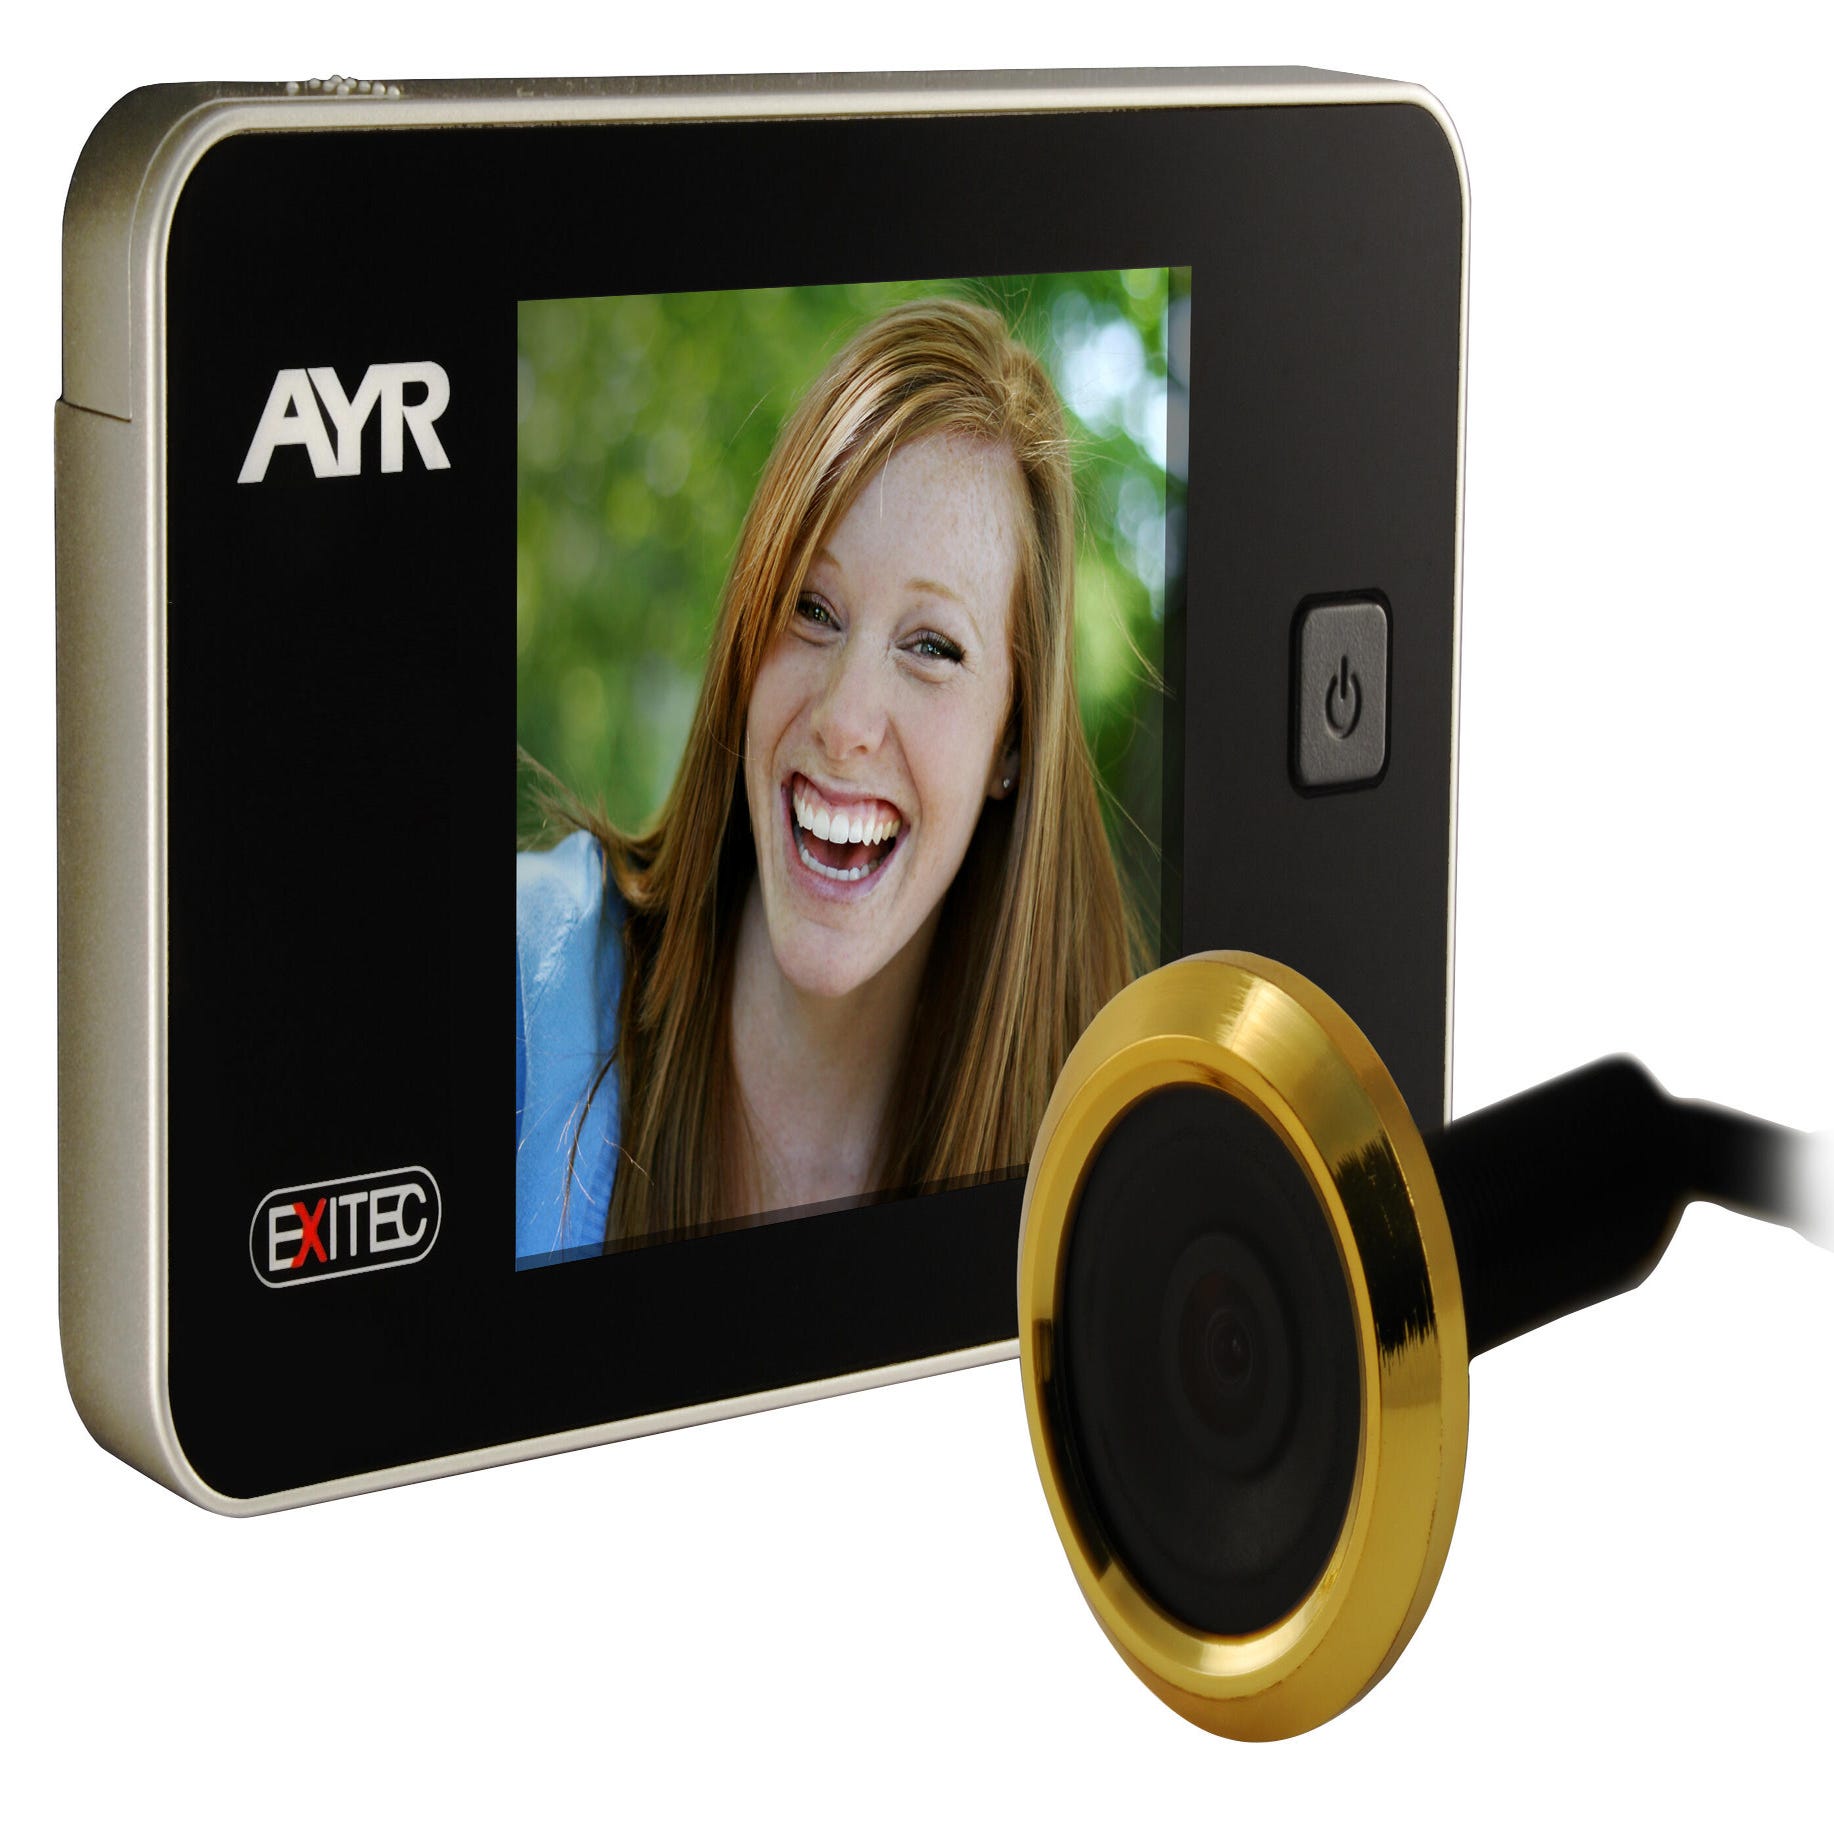 Mirilla digital AYR MOD 752 con pantalla LCD 3.2 dorada